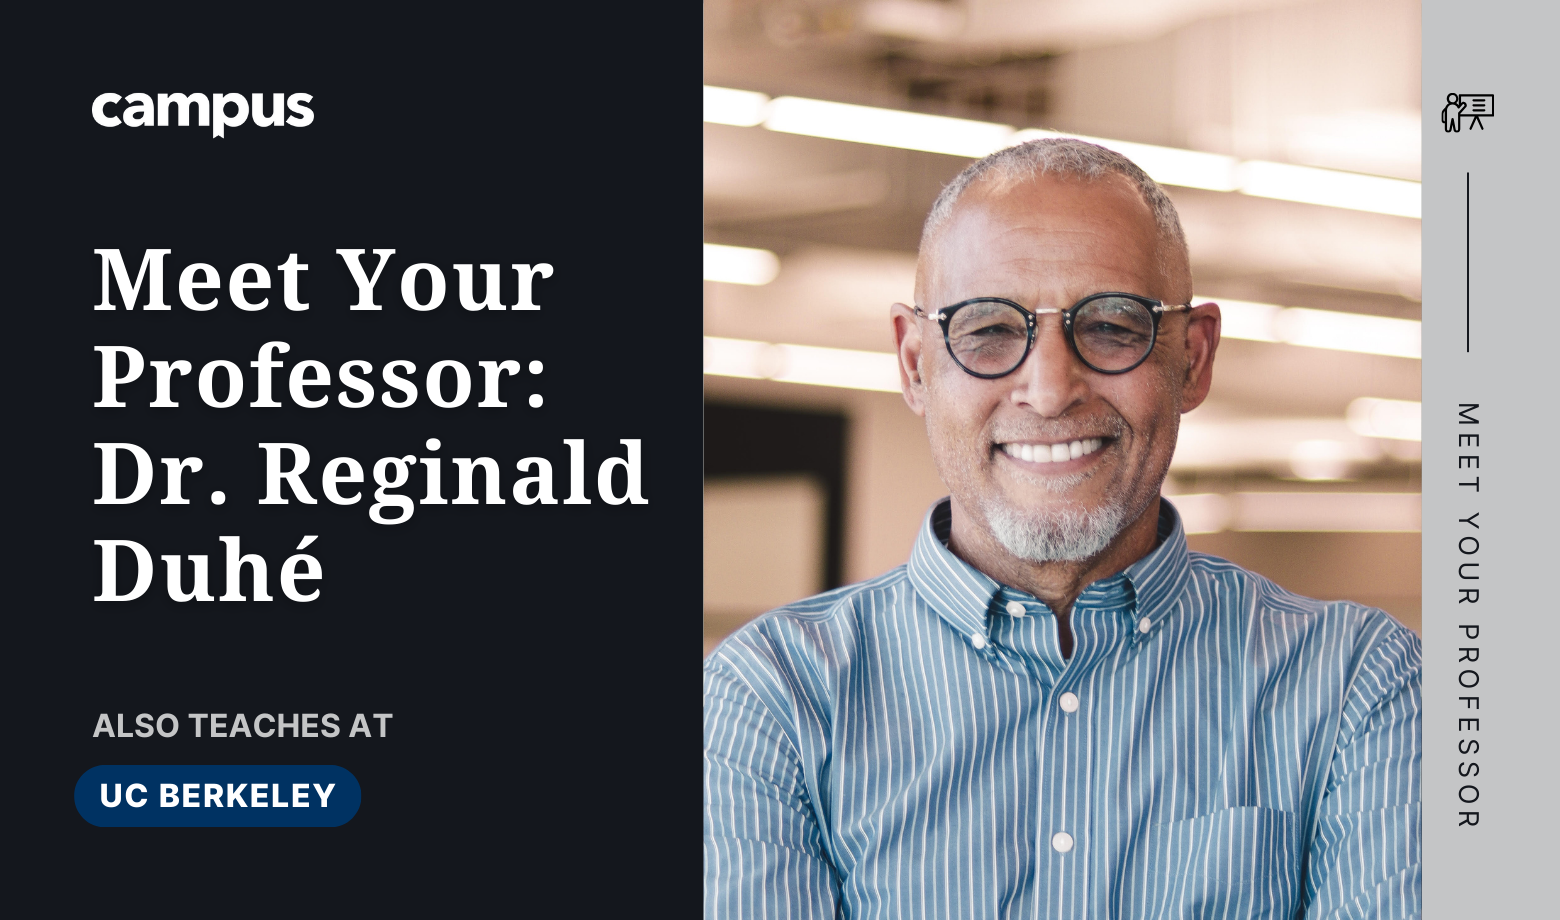 Meet Your Professor: Dr. Reginald Duhé